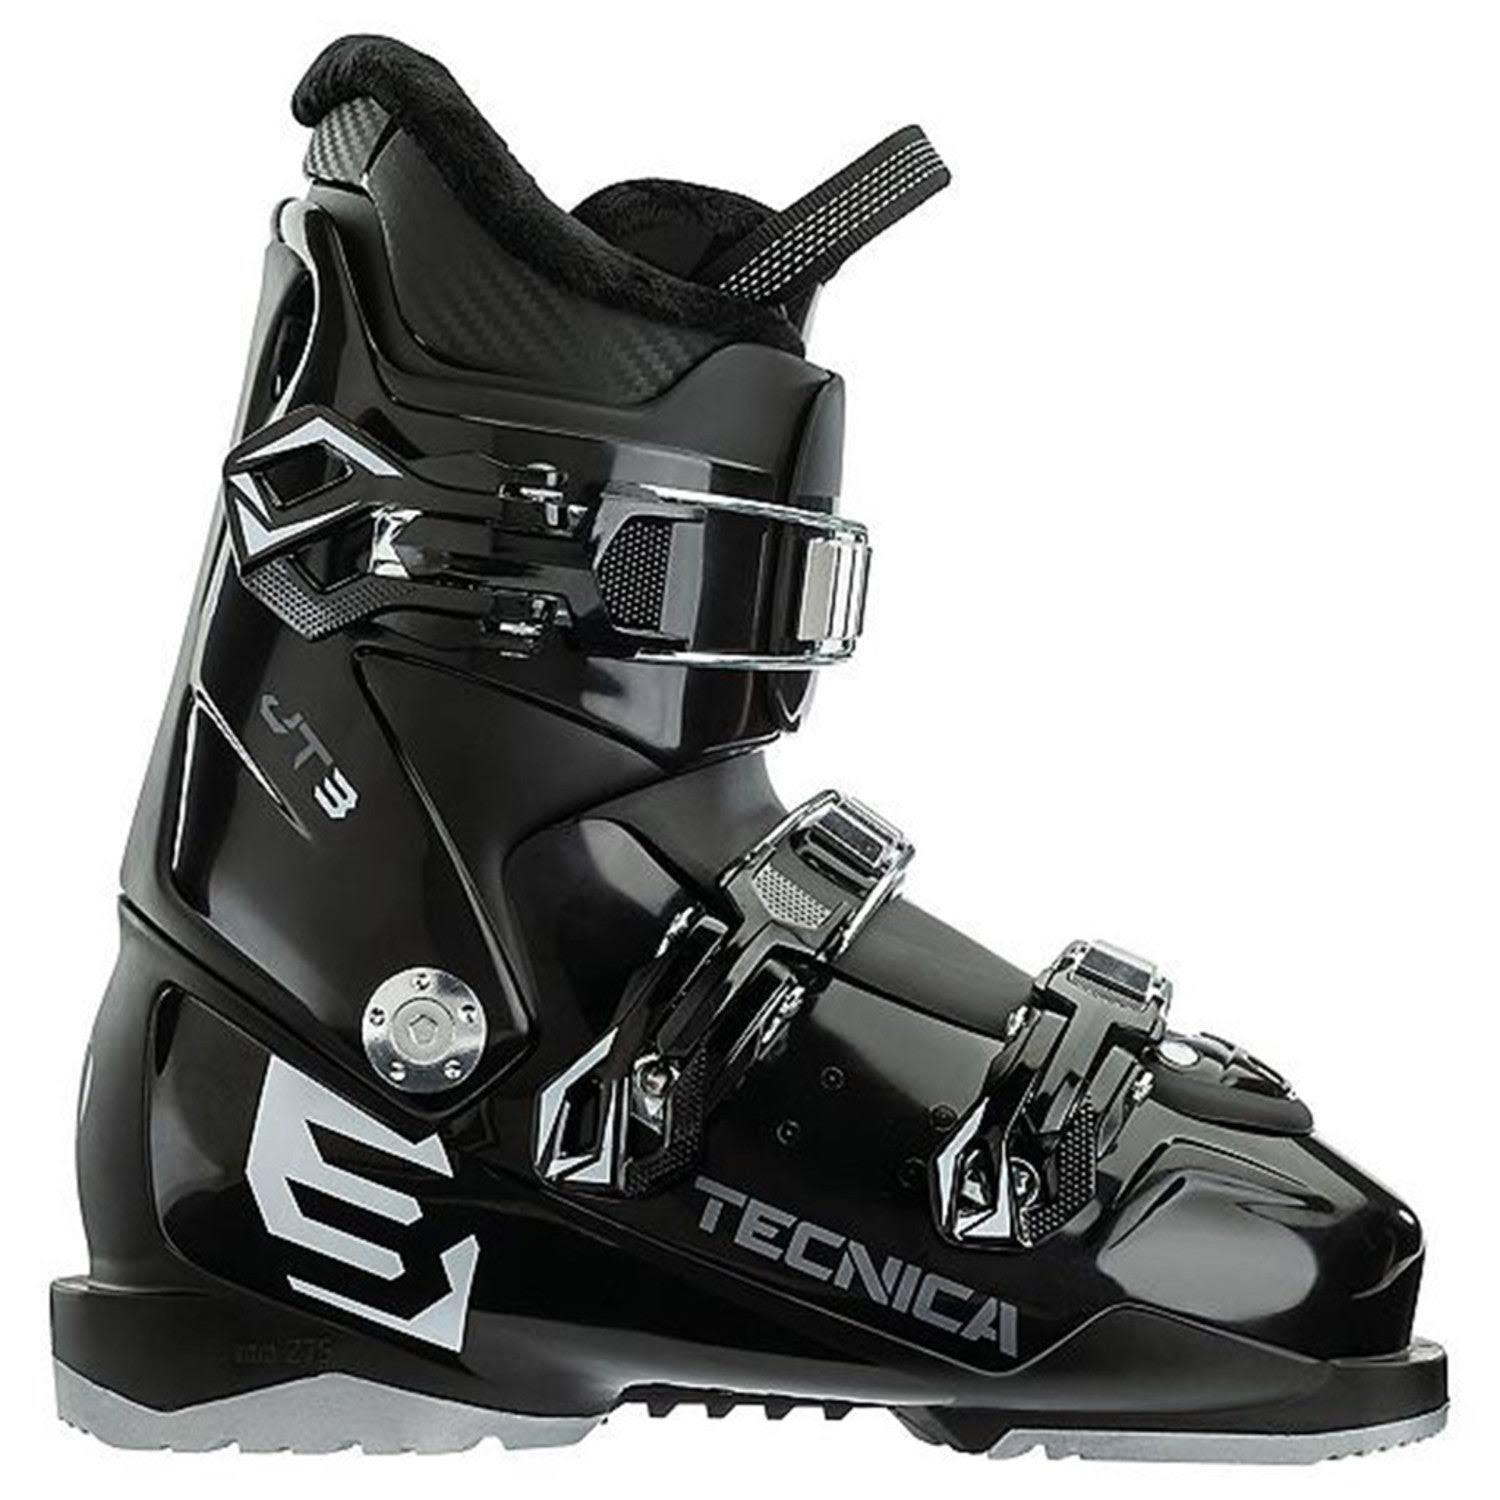 Tecnica JT 3 Ski Boots